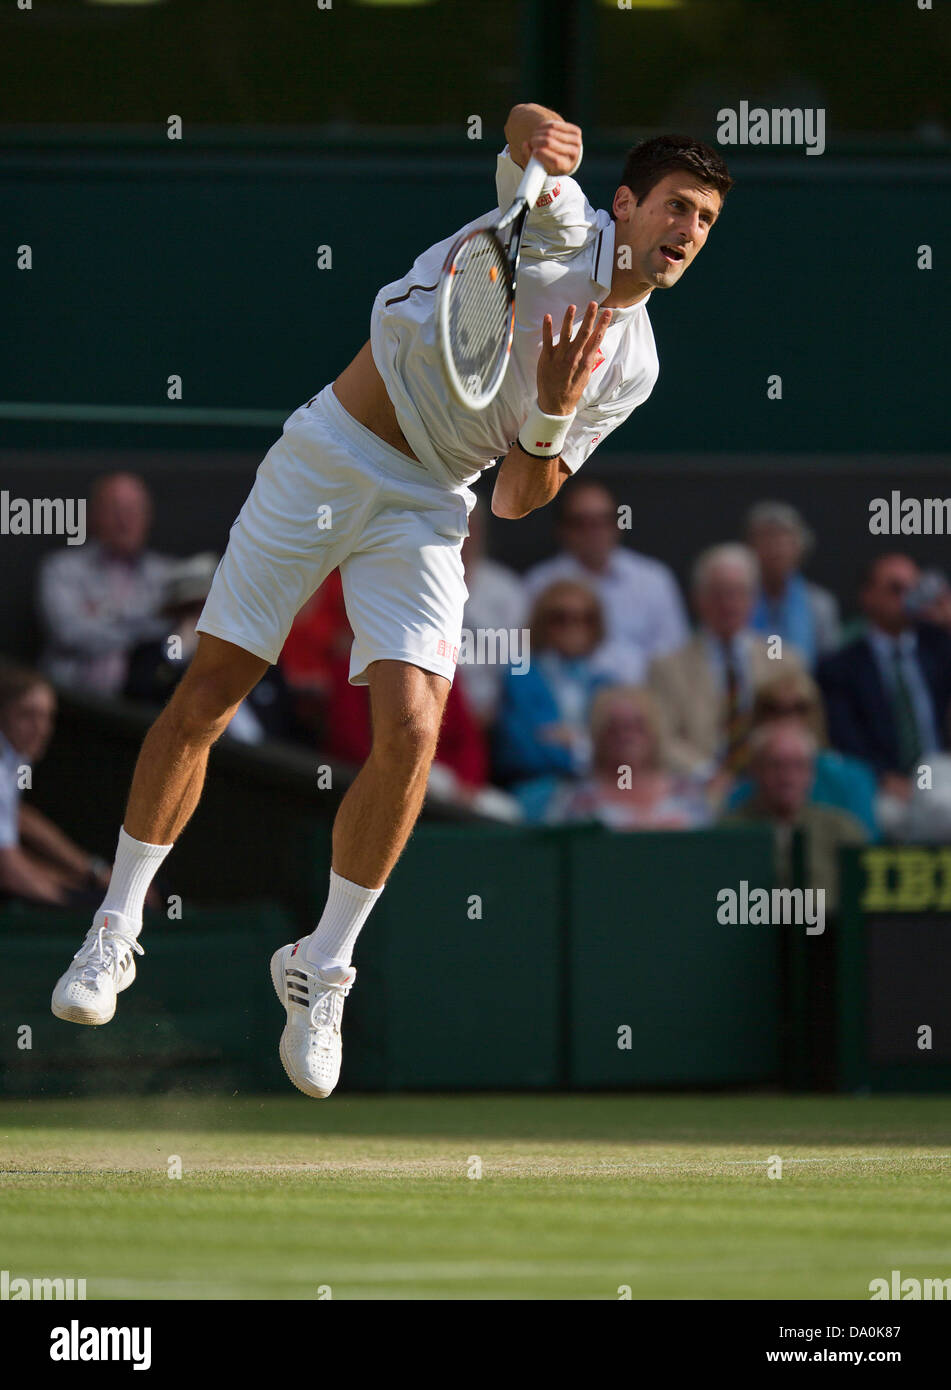 29.06.13, England, London, AELTC, Wimbledon, Tennis, Wimbledon 2013, Tag 6, Novak Djokovic (SRB) Foto: Henk Koster Stockfoto